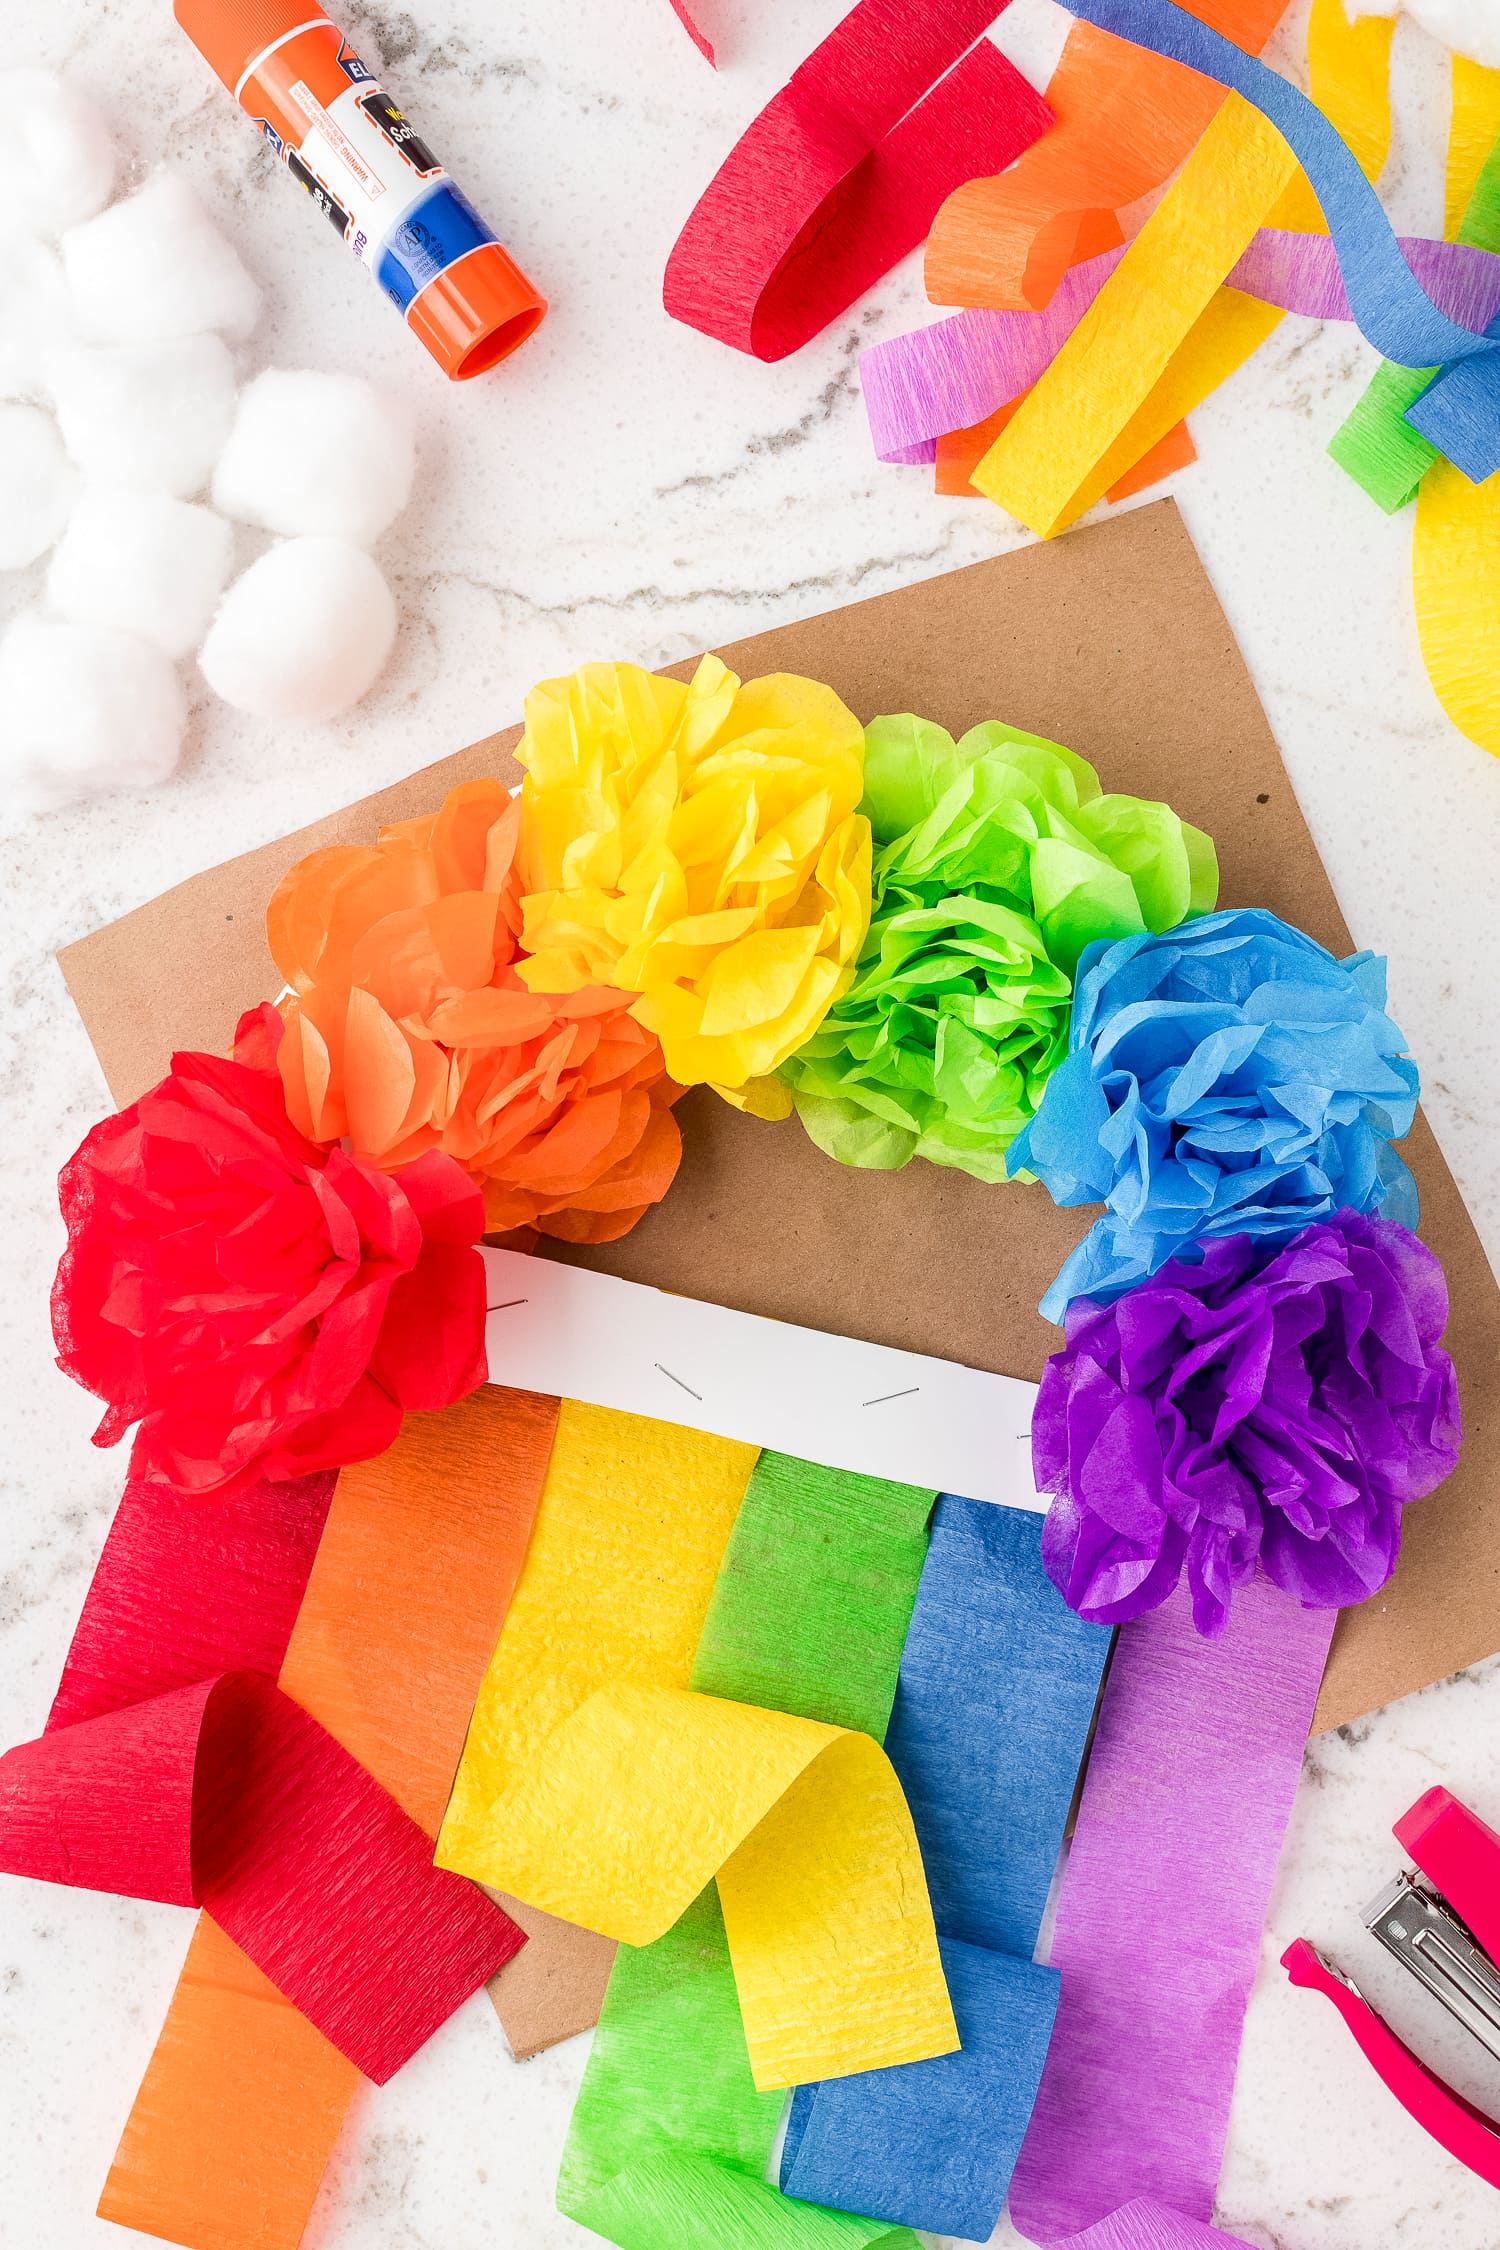 Tissue paper streamers on rainbow craft